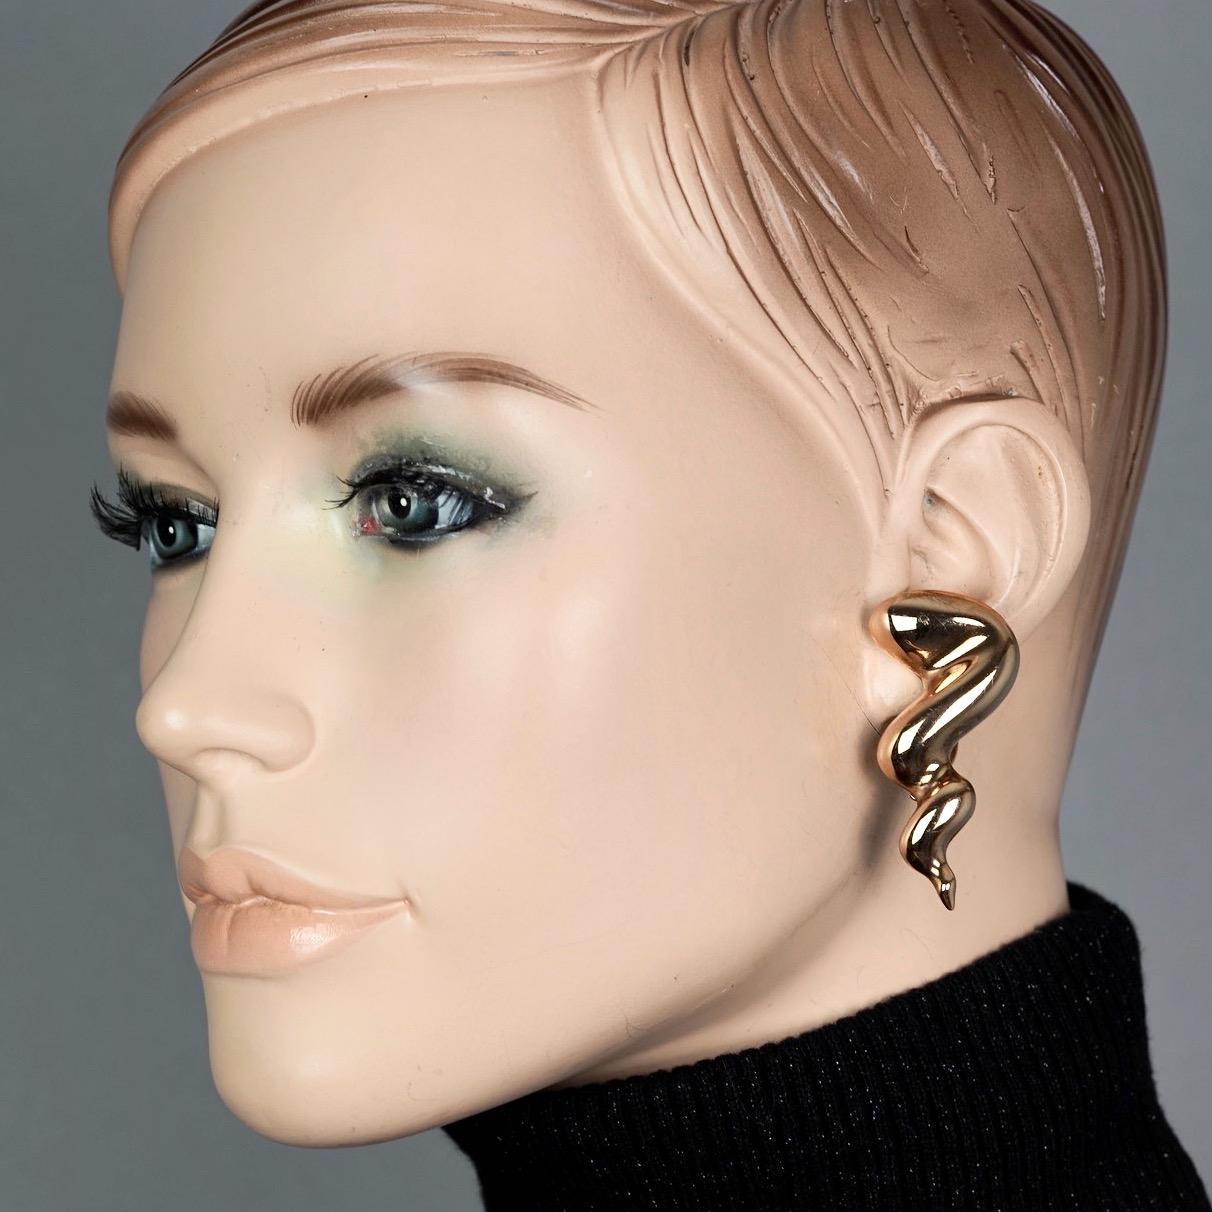 Vintage JEAN LOUIS SCHERRER Gilt Spiral Horn Novelty Earrings

Measurements:
Height: 1.97 inches (5 cm)
Width: 0.86 inch (2.2 cm)
Weight per Earring: 13 grams

Features:
- 100% Authentic JEAN LOUIS SCHERRER.
- Gilt spiral horn novelty earrings.
-